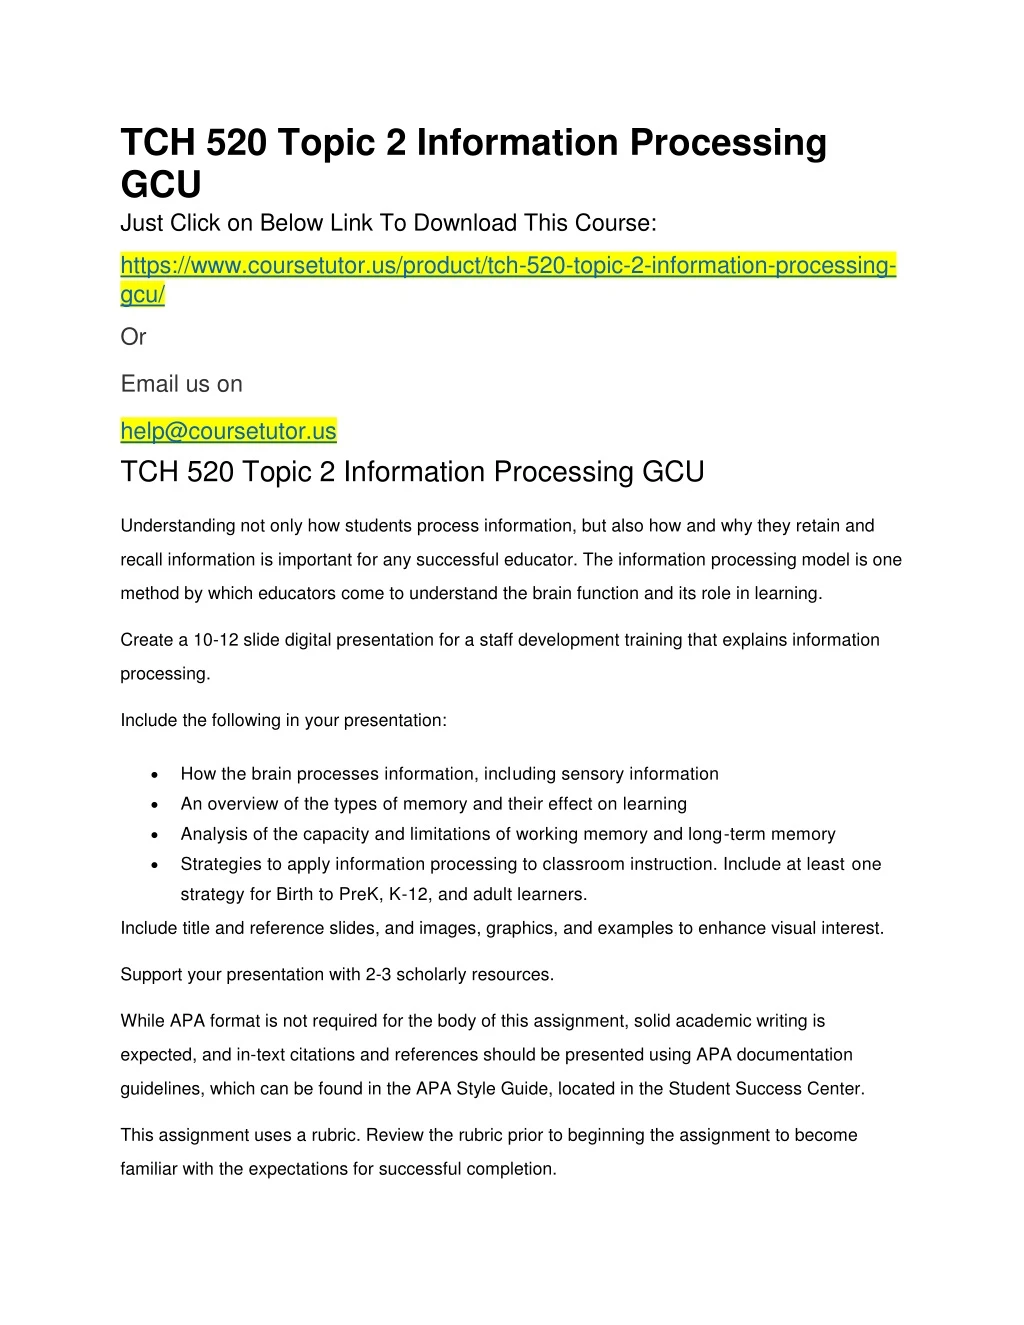 tch 520 topic 2 information processing gcu just